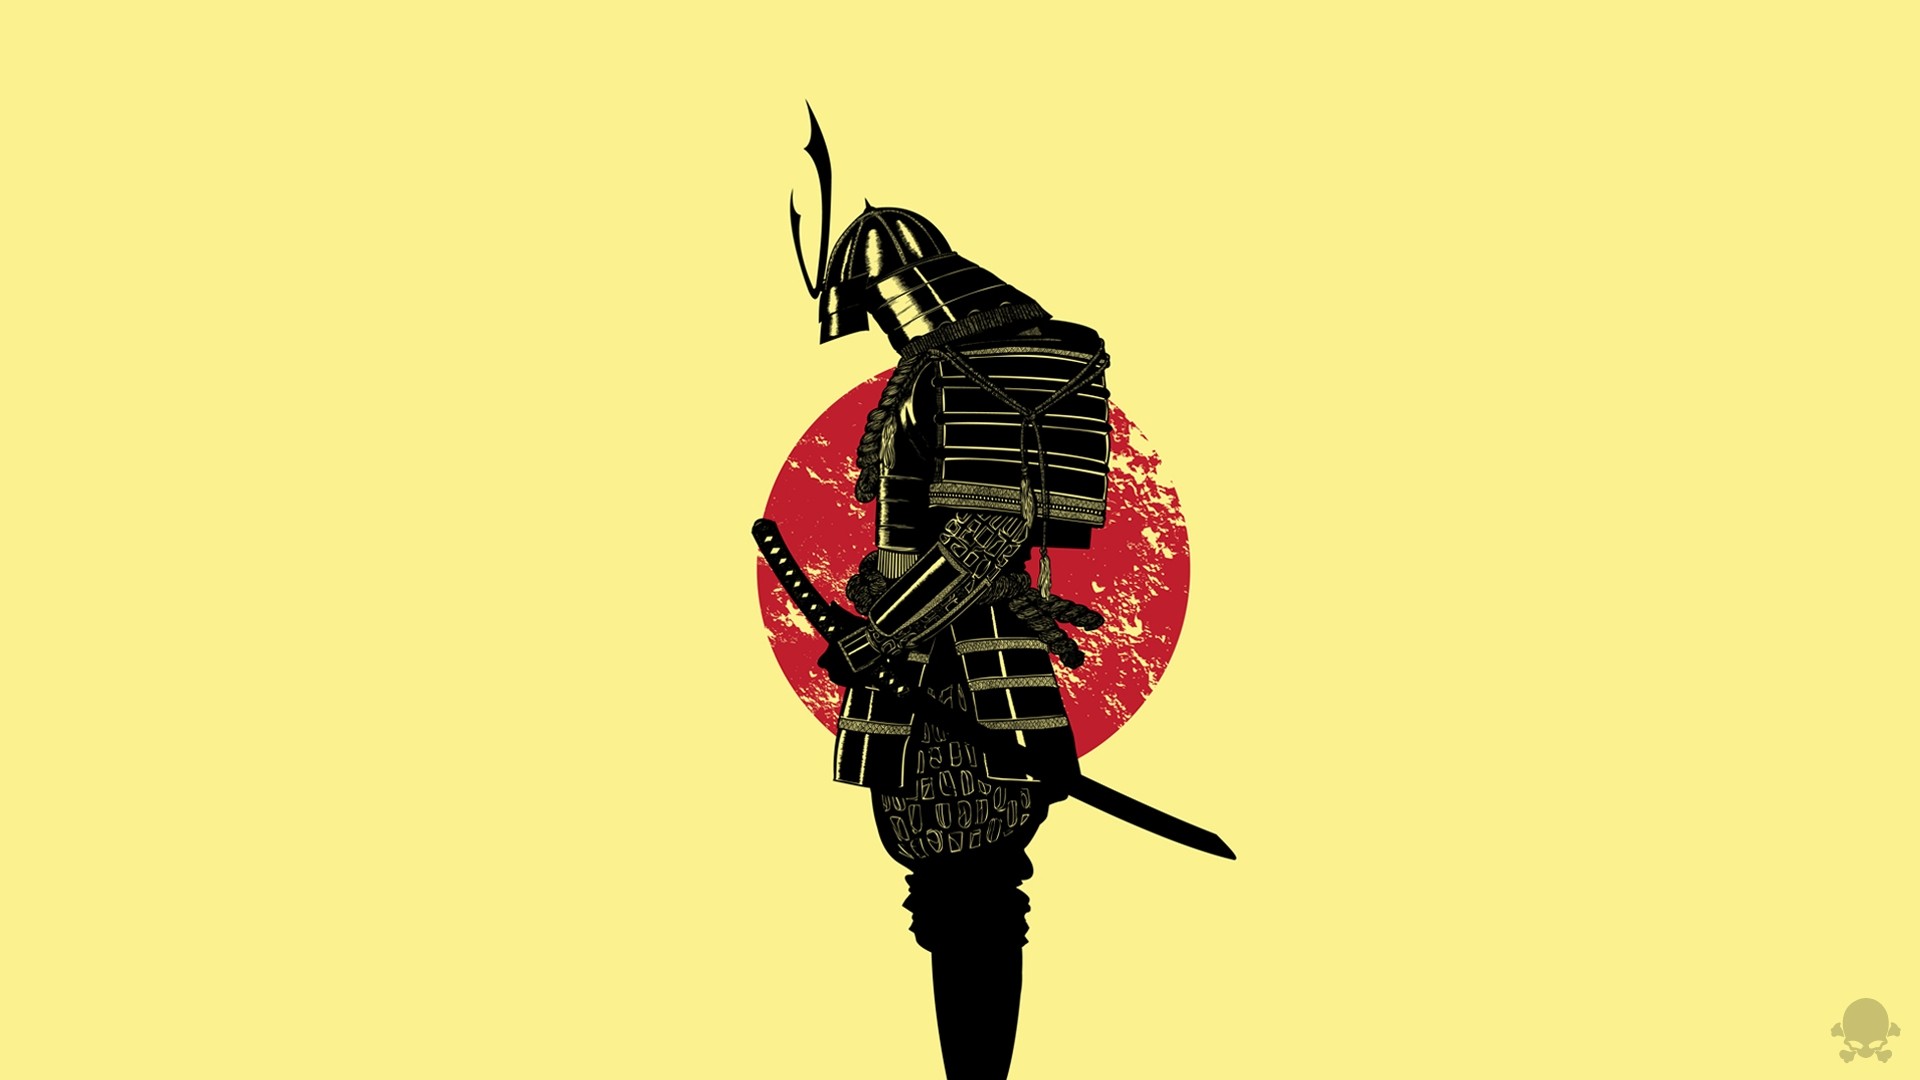 Samurai Wallpaper